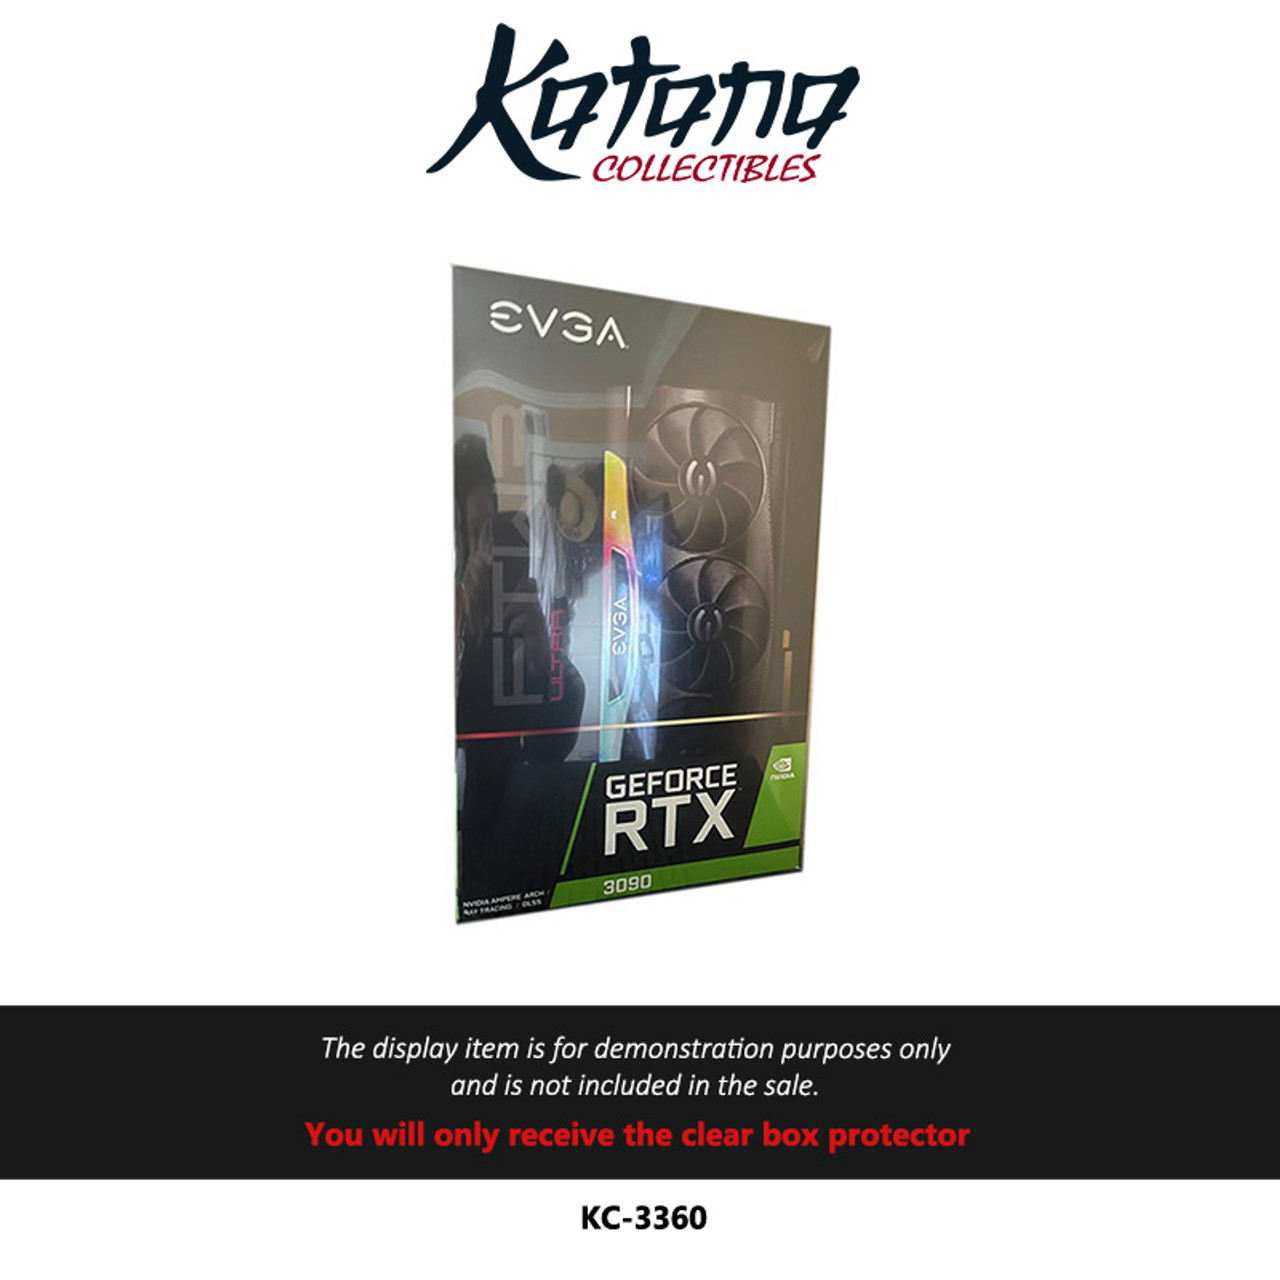 Katana Collectibles Protector For GEFORCE RTX 3090 Box